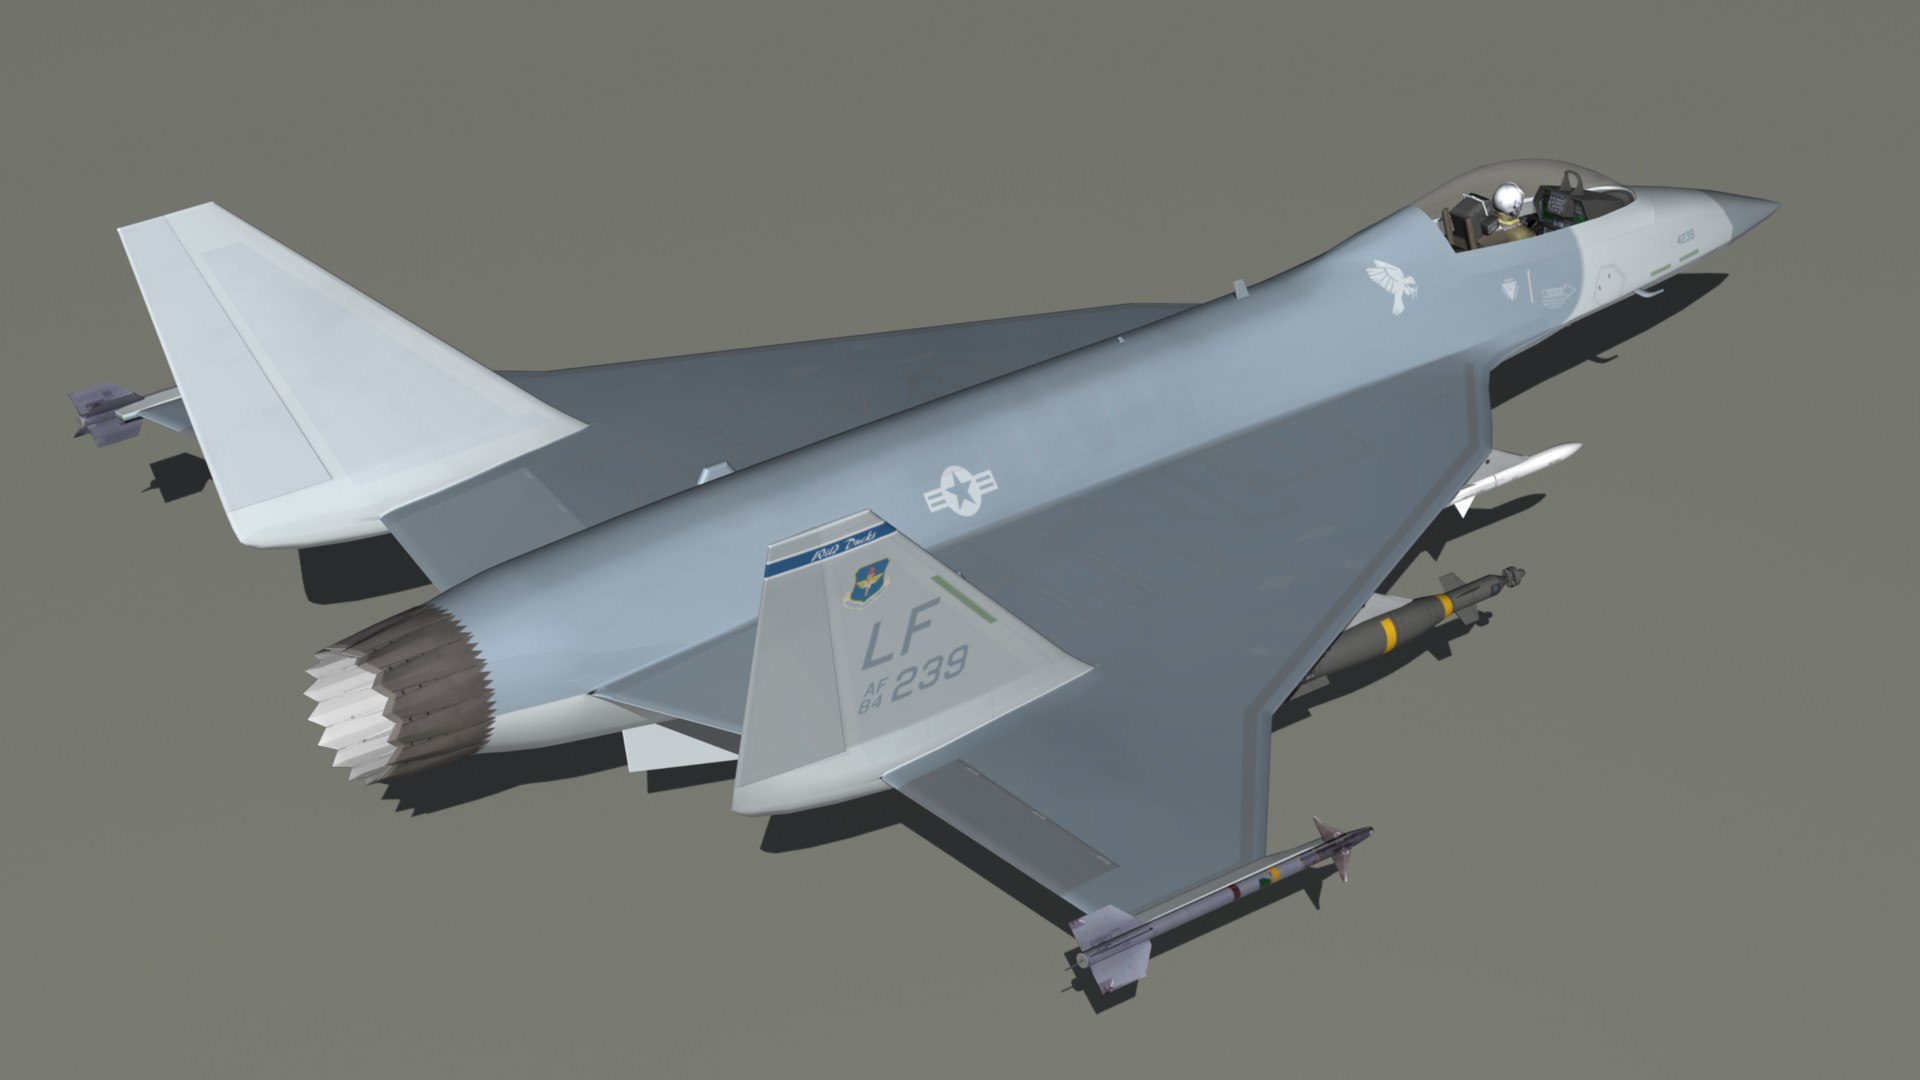 F-36 Kingsnake: Air Force's Next Fighter Jet?